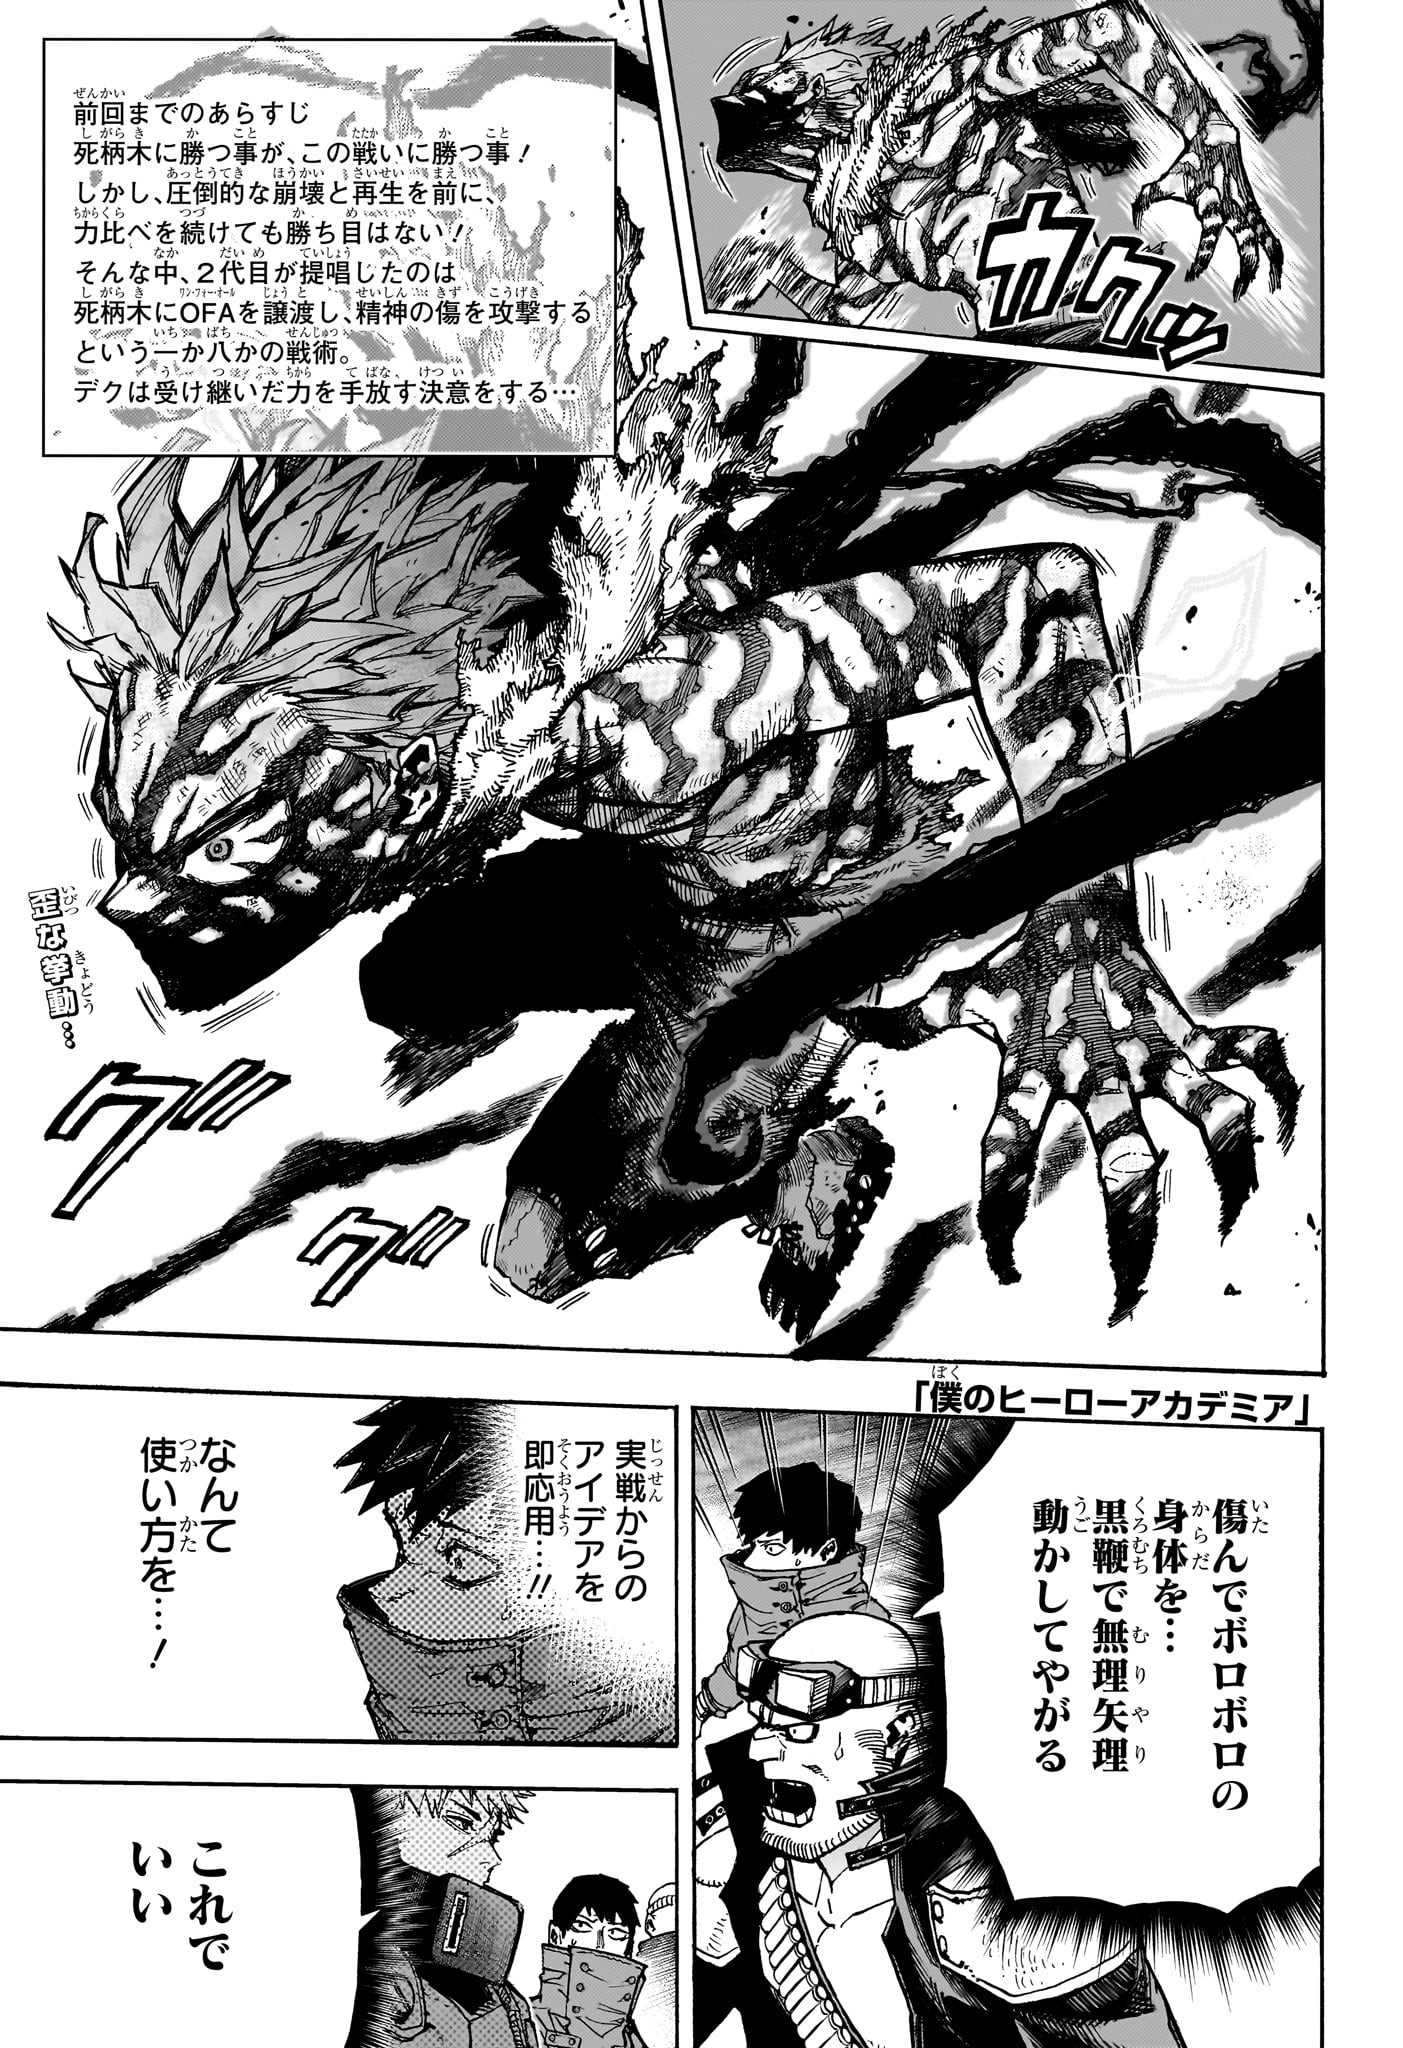 Boku no Hero Academia - Chapter 414 - Page 1